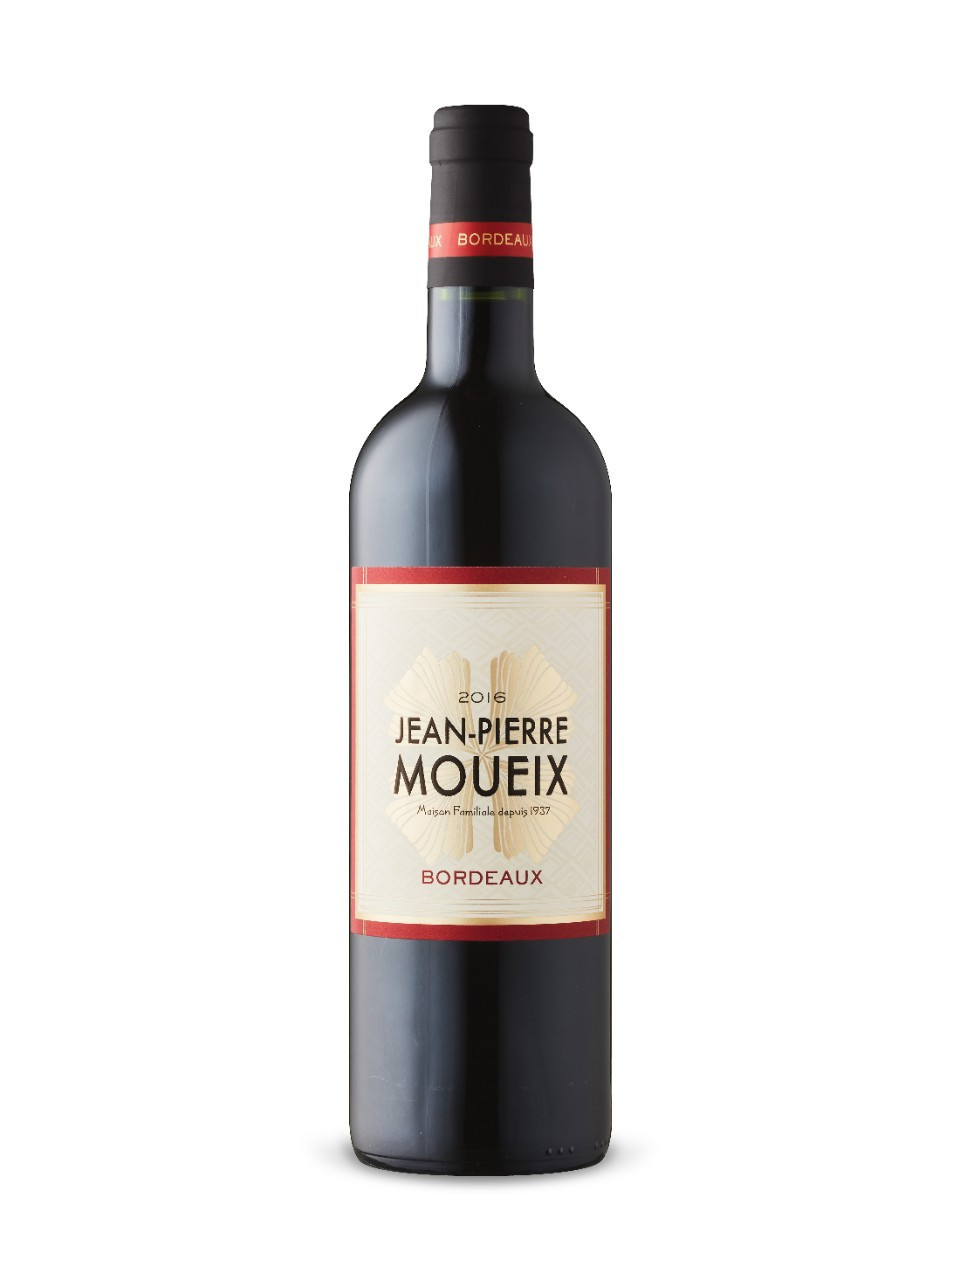 Jean-pierre moueix bordeaux 2016 merlot blend  750 ml bottle